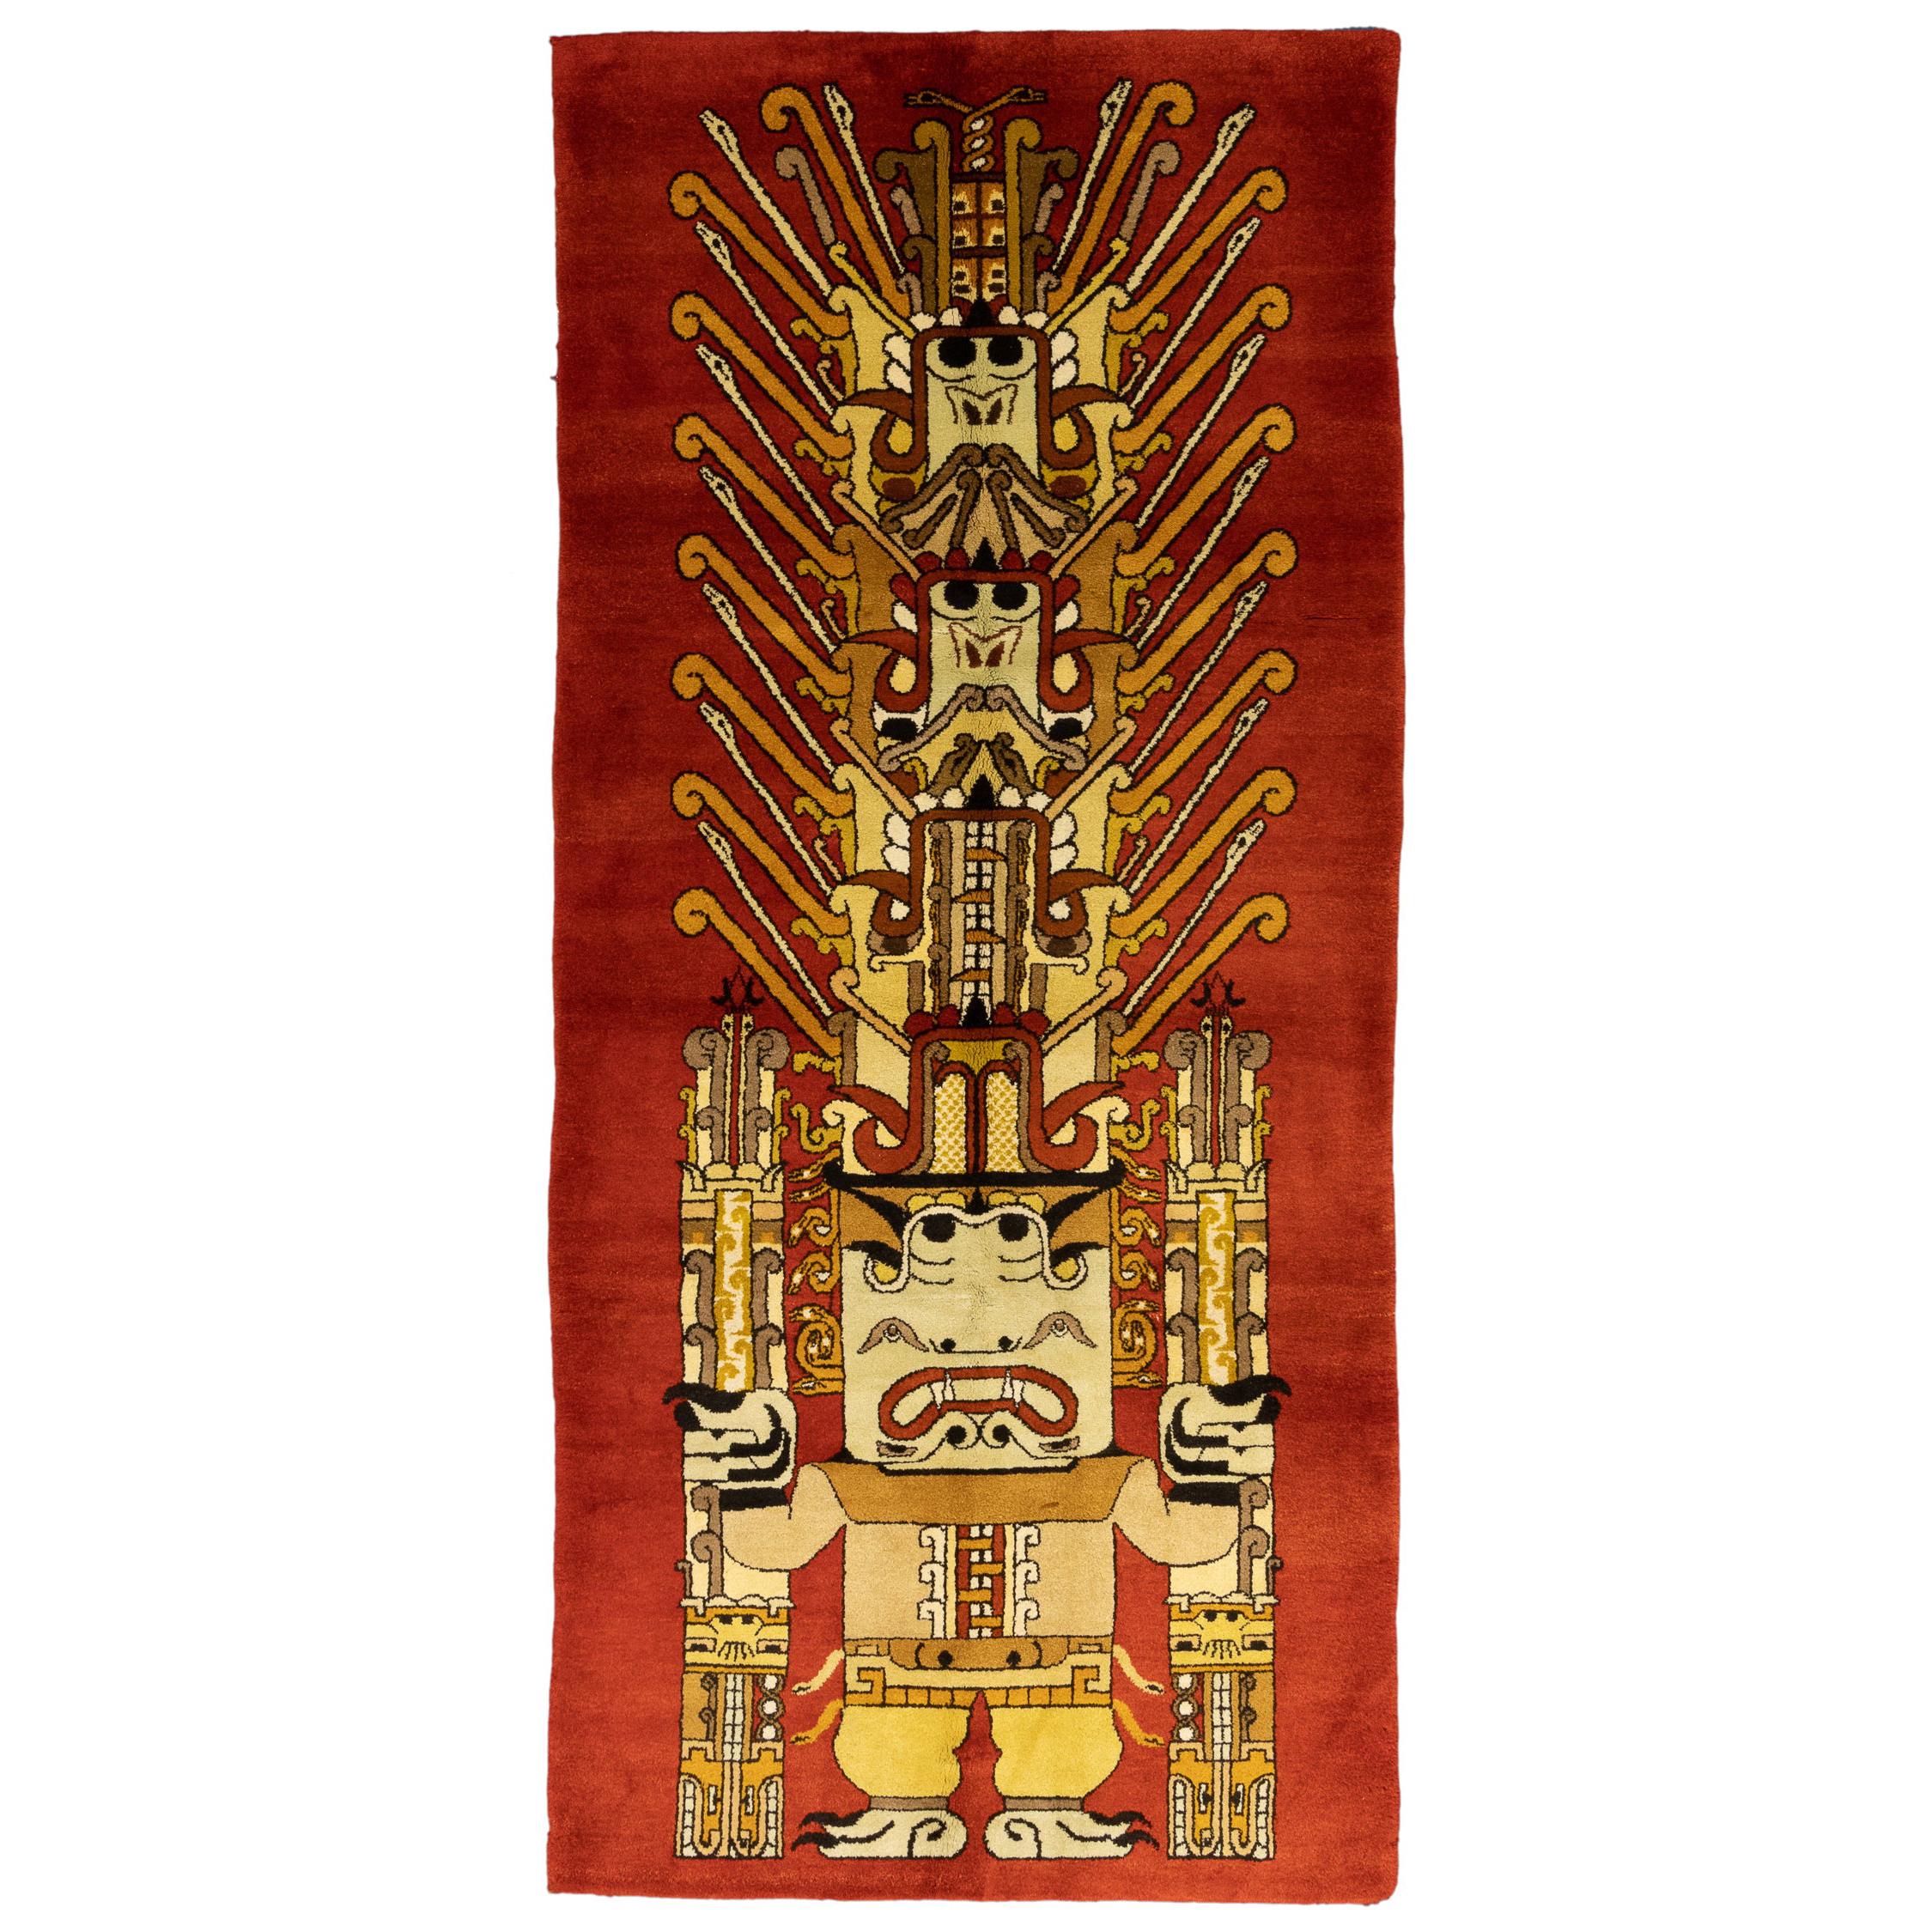 European Rug with Mayan Culture Design, 1950-1970